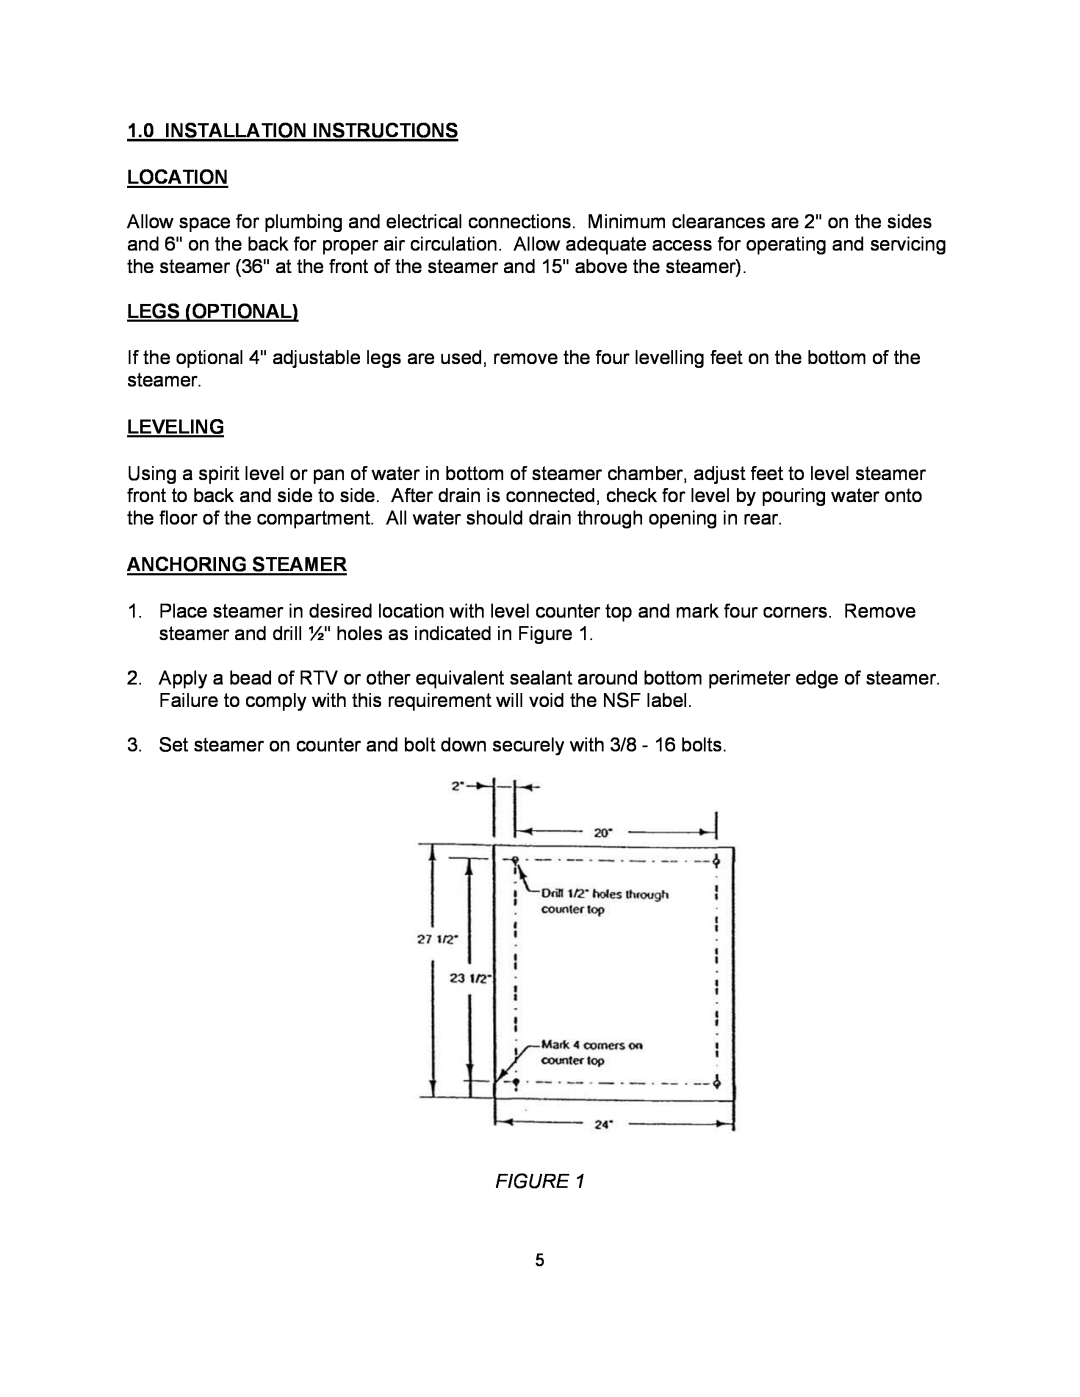 Blodgett SN-3E, SN-5E manual 1.0INSTALLATION INSTRUCTIONS LOCATION, Legs Optional, Leveling, Anchoring Steamer 